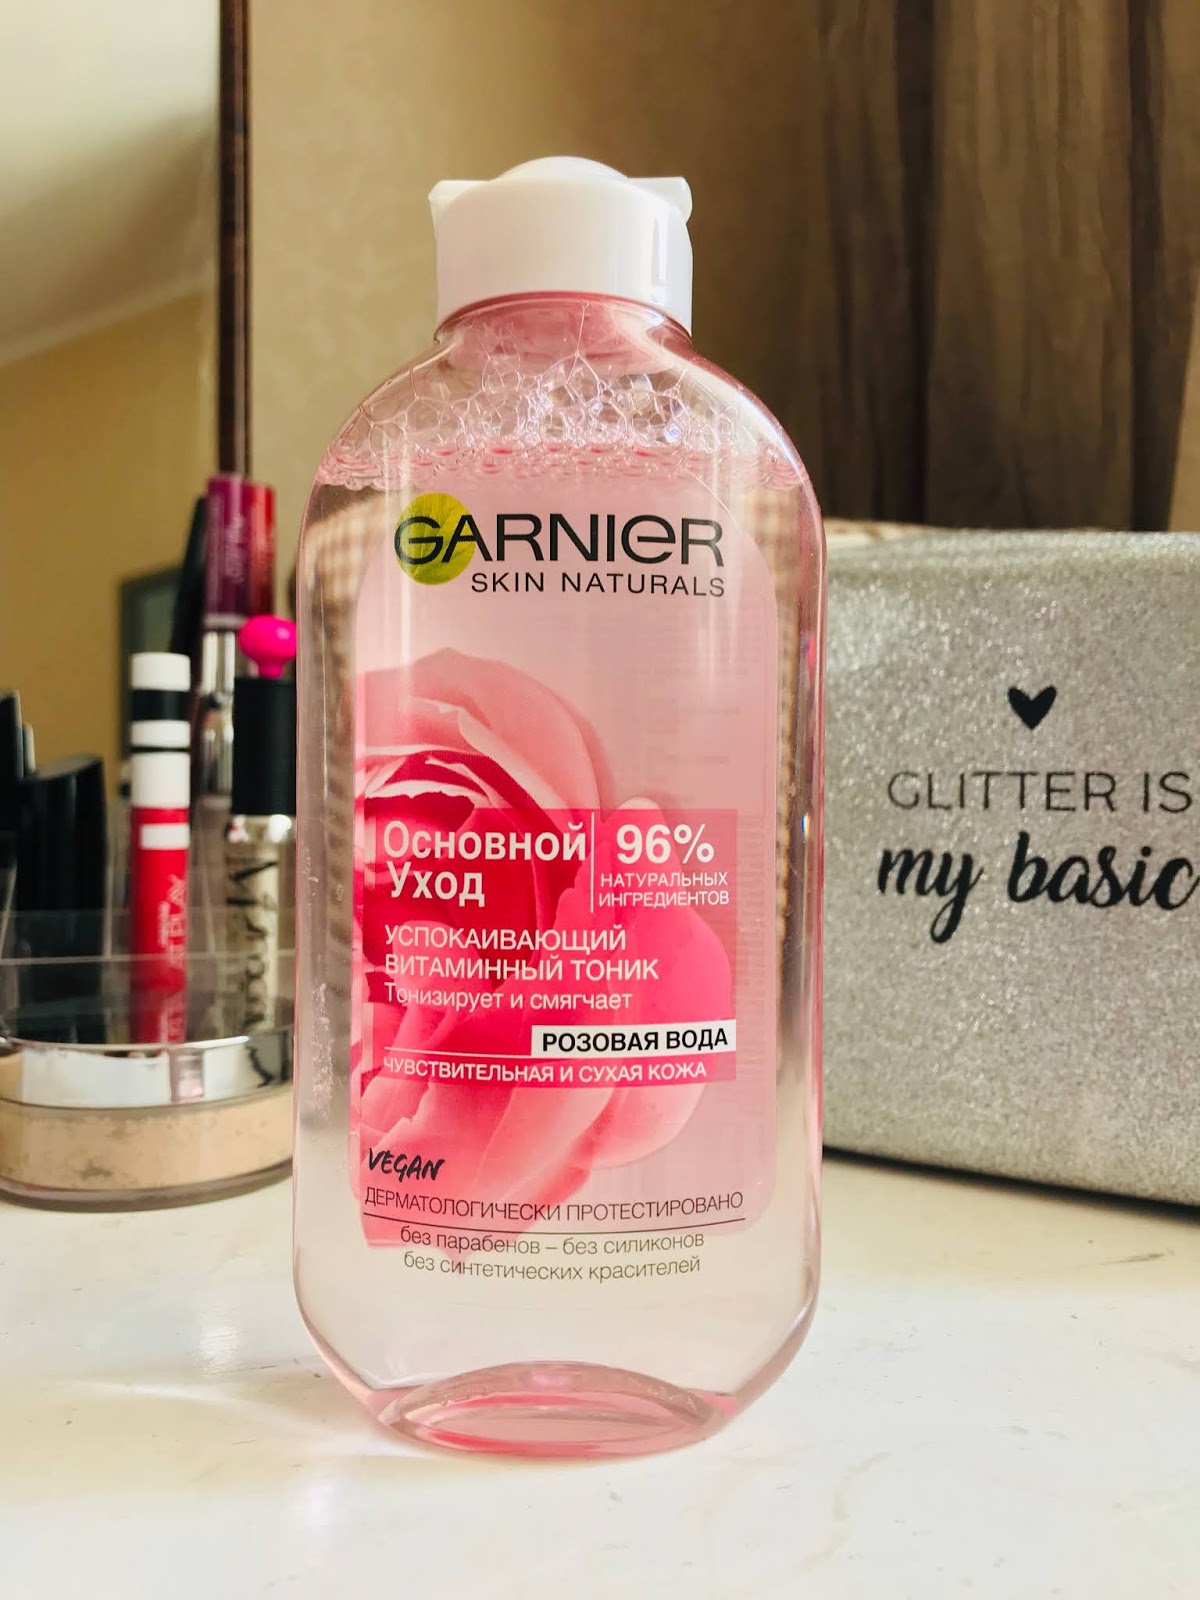 Garnier розовая вода